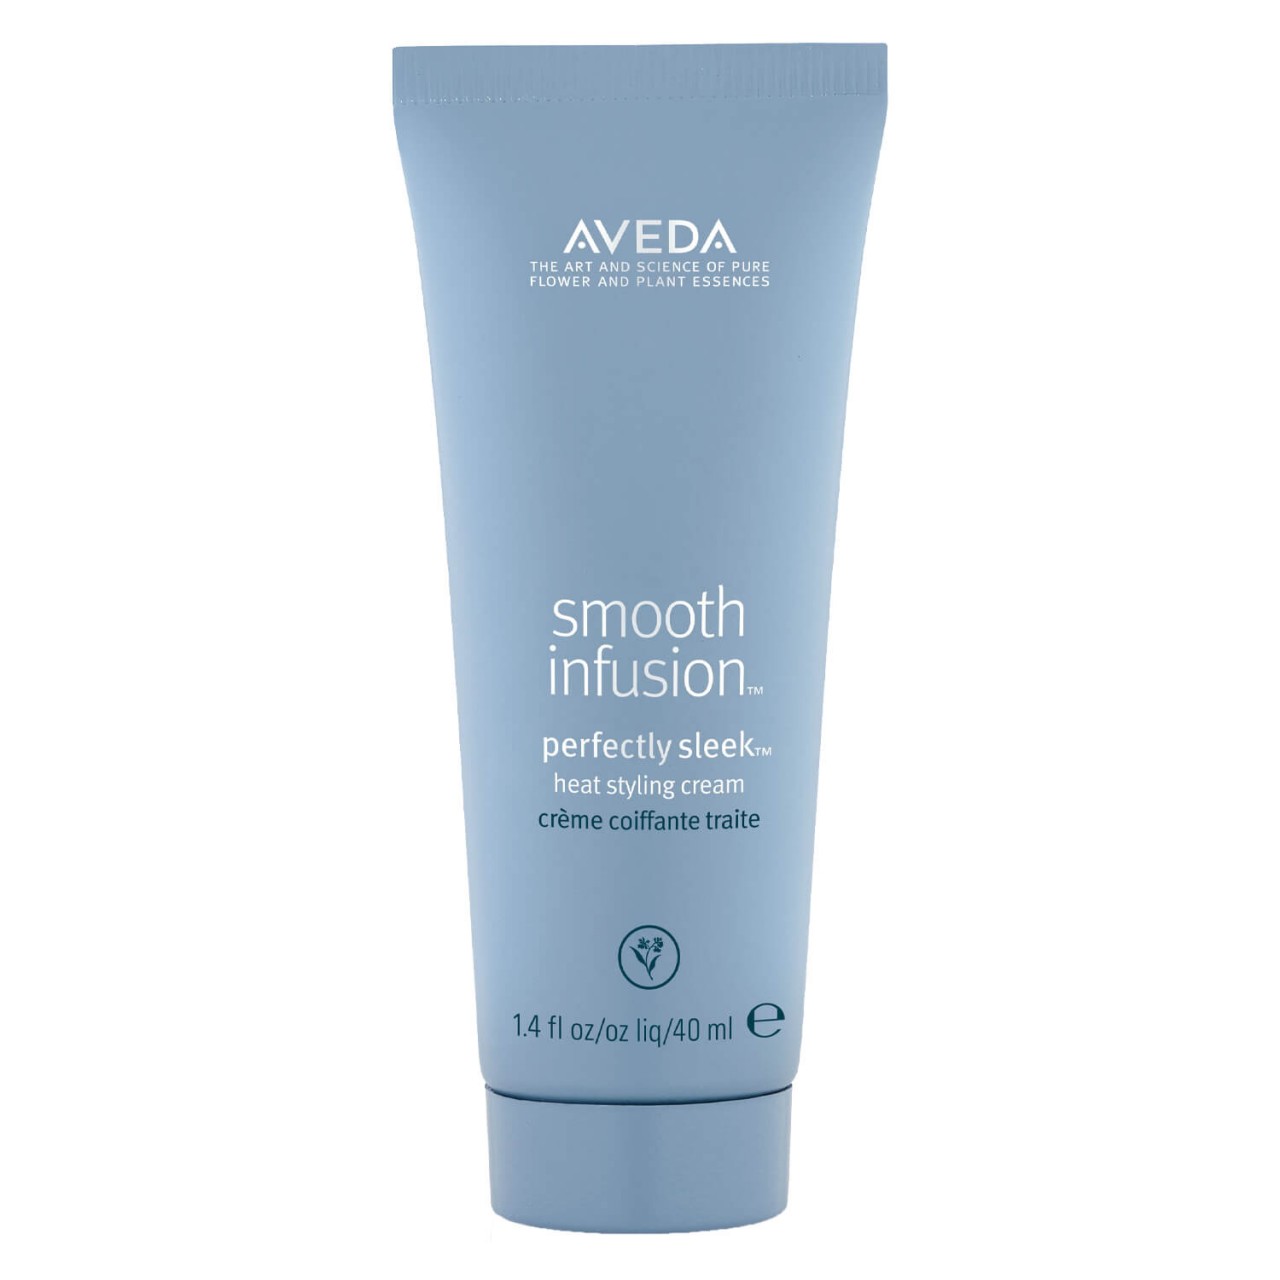 smooth infusion - perfectly sleek heat styling cream von Aveda